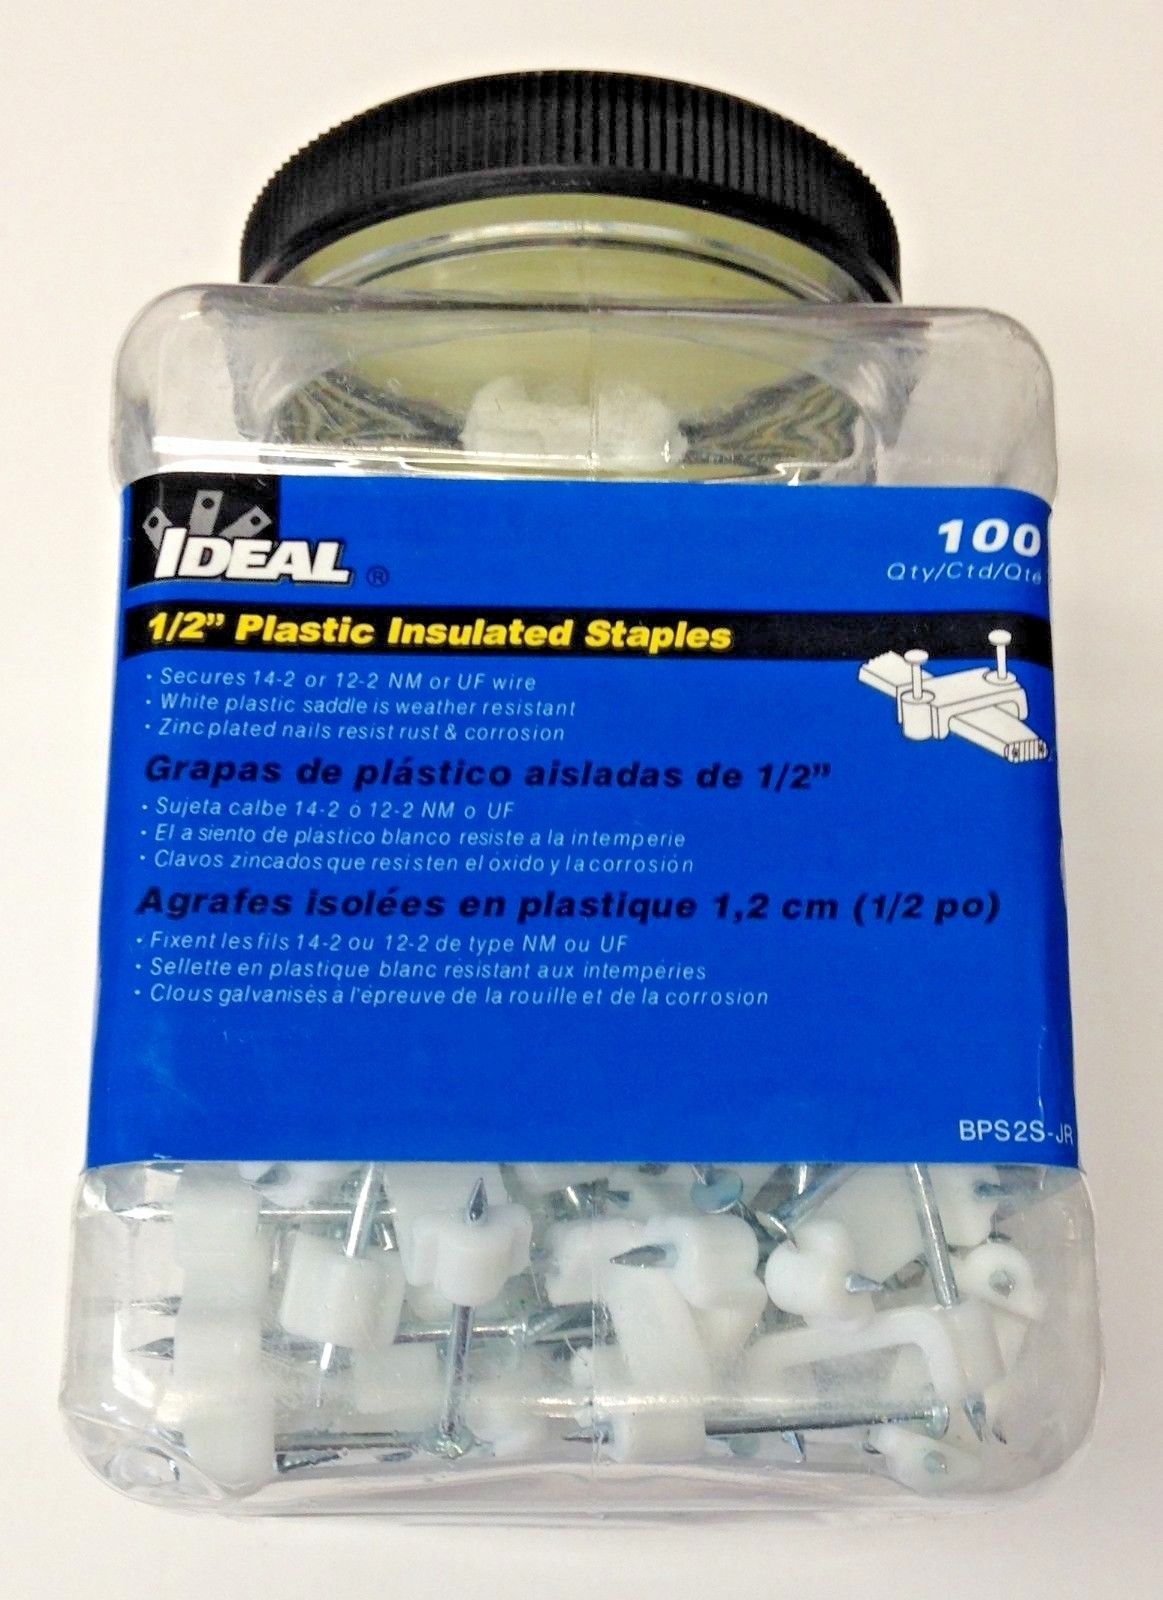 Ideal BPS2S-JR 1/2" White Plastic Insulated Staples 100 Pack